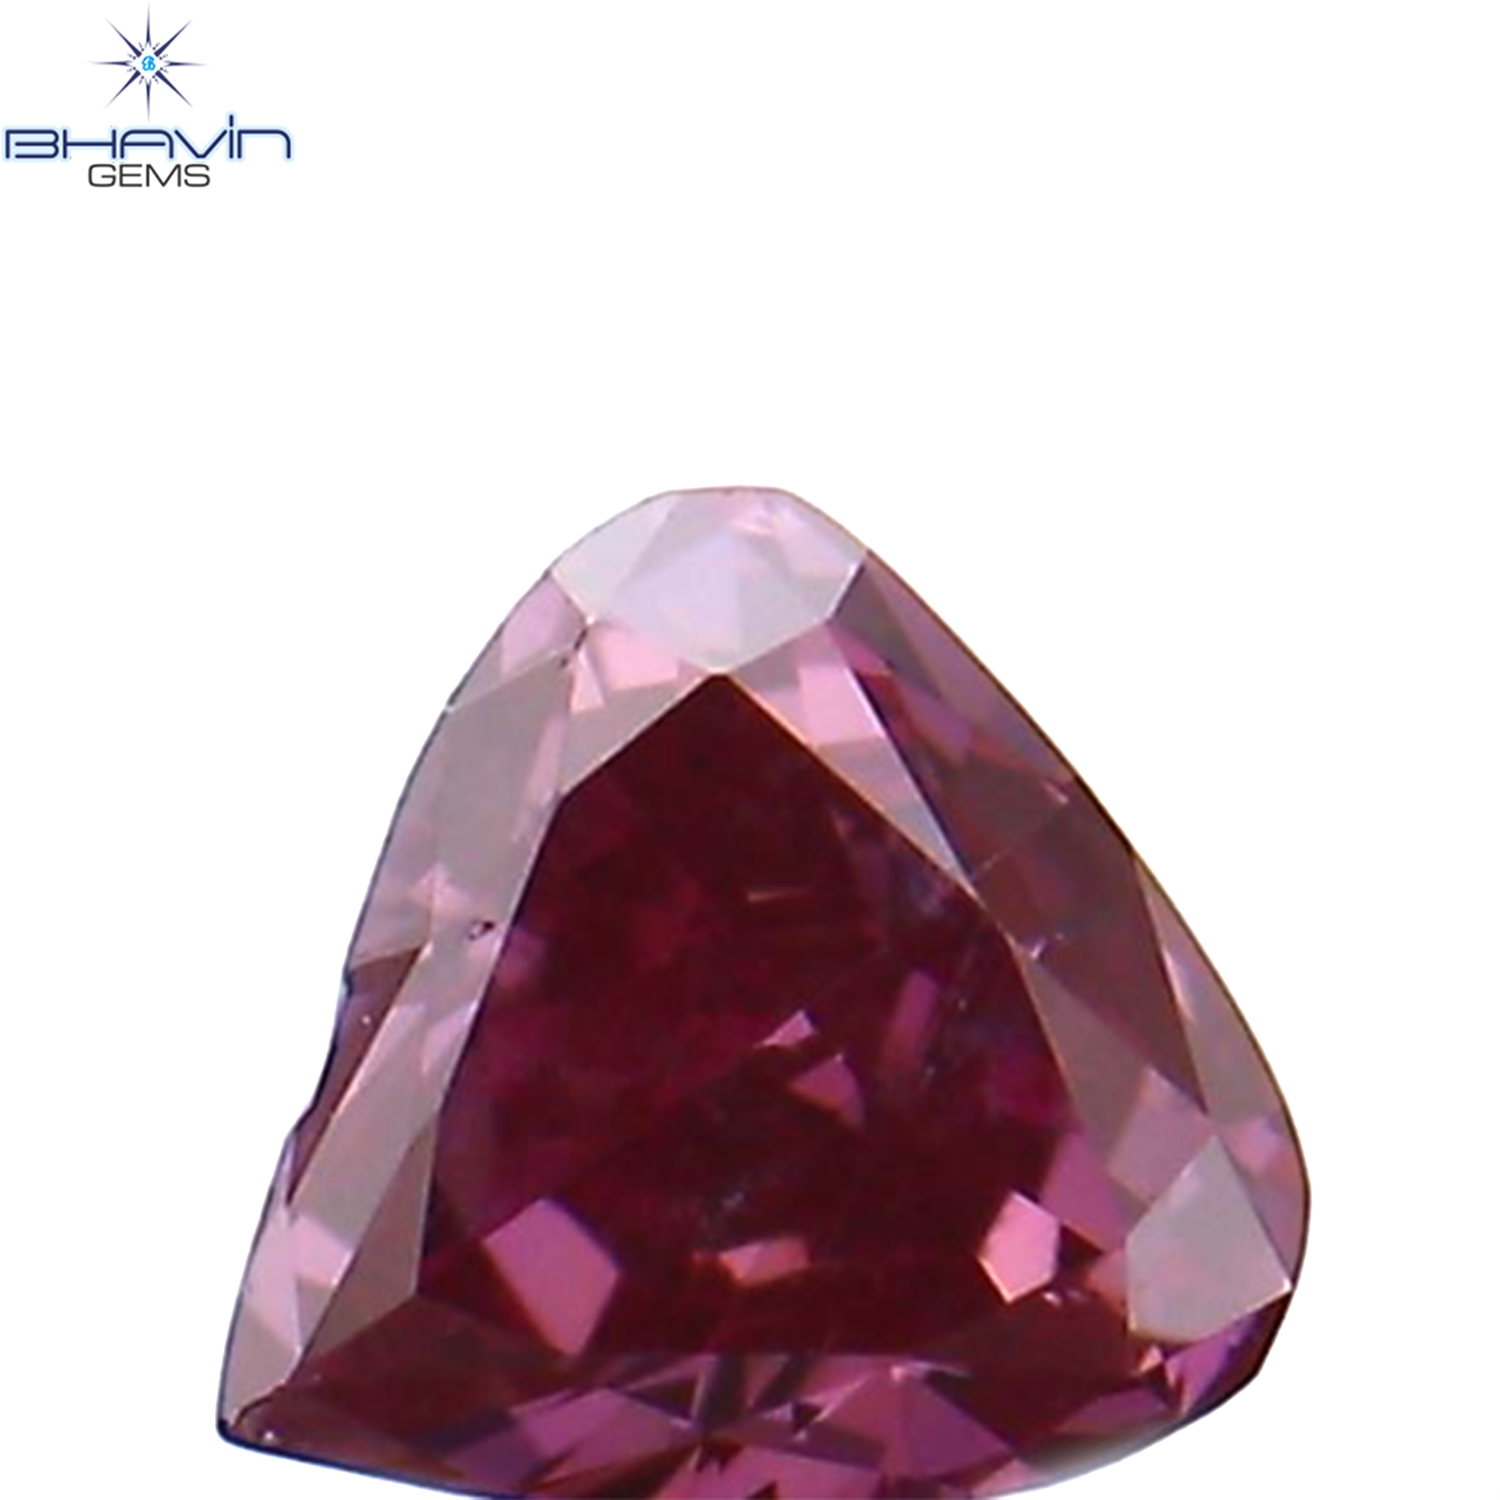 0.12 CT Heart Shape Natural Diamond Enhanced Pink Color VS2 Clarity (3.03 MM)